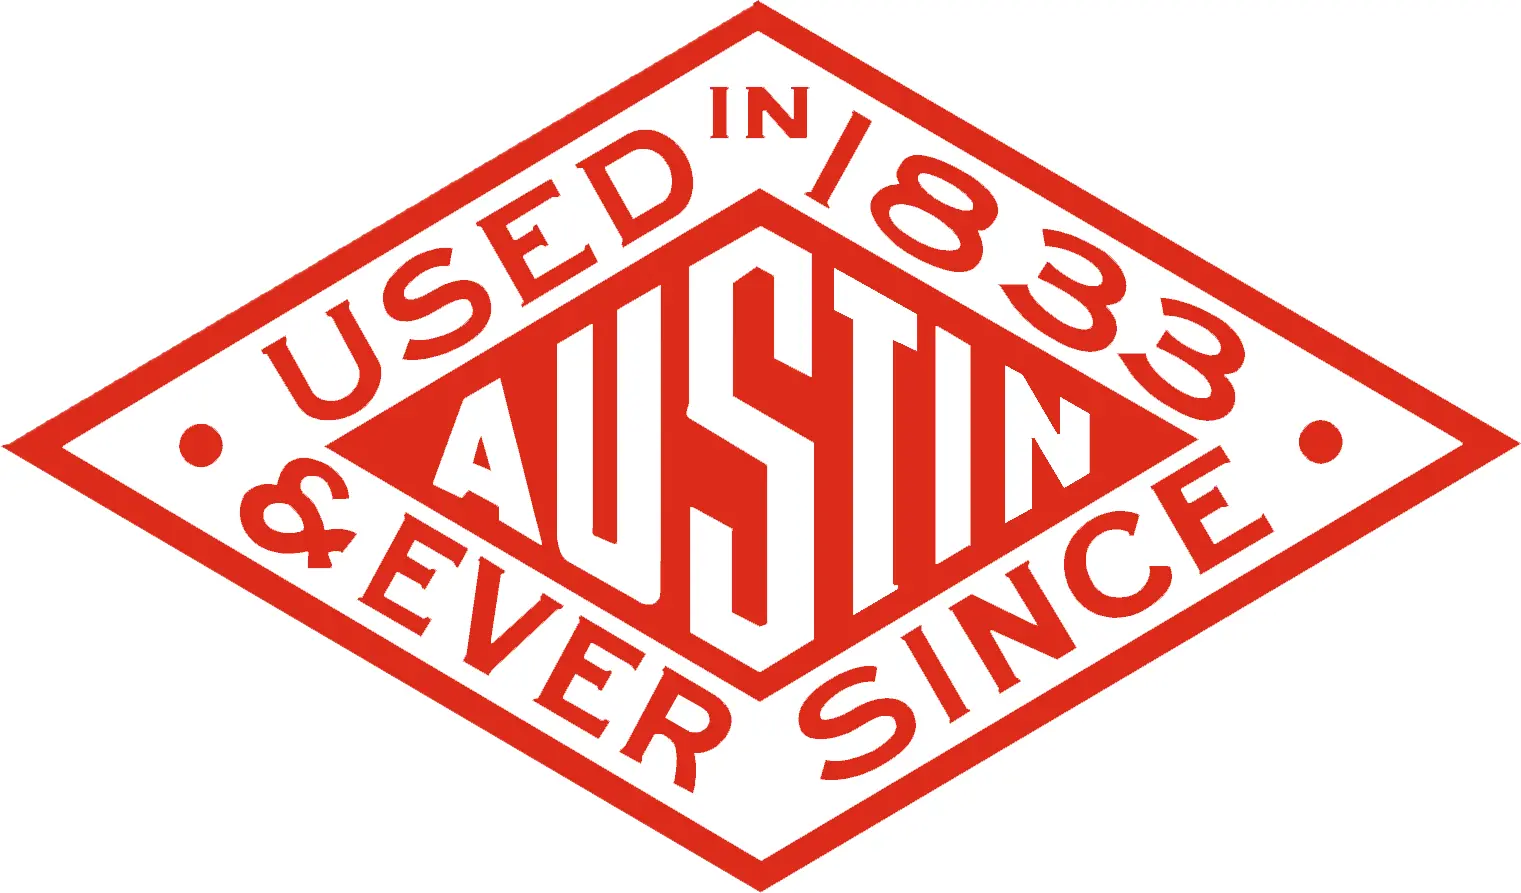 Austin Powder Logo